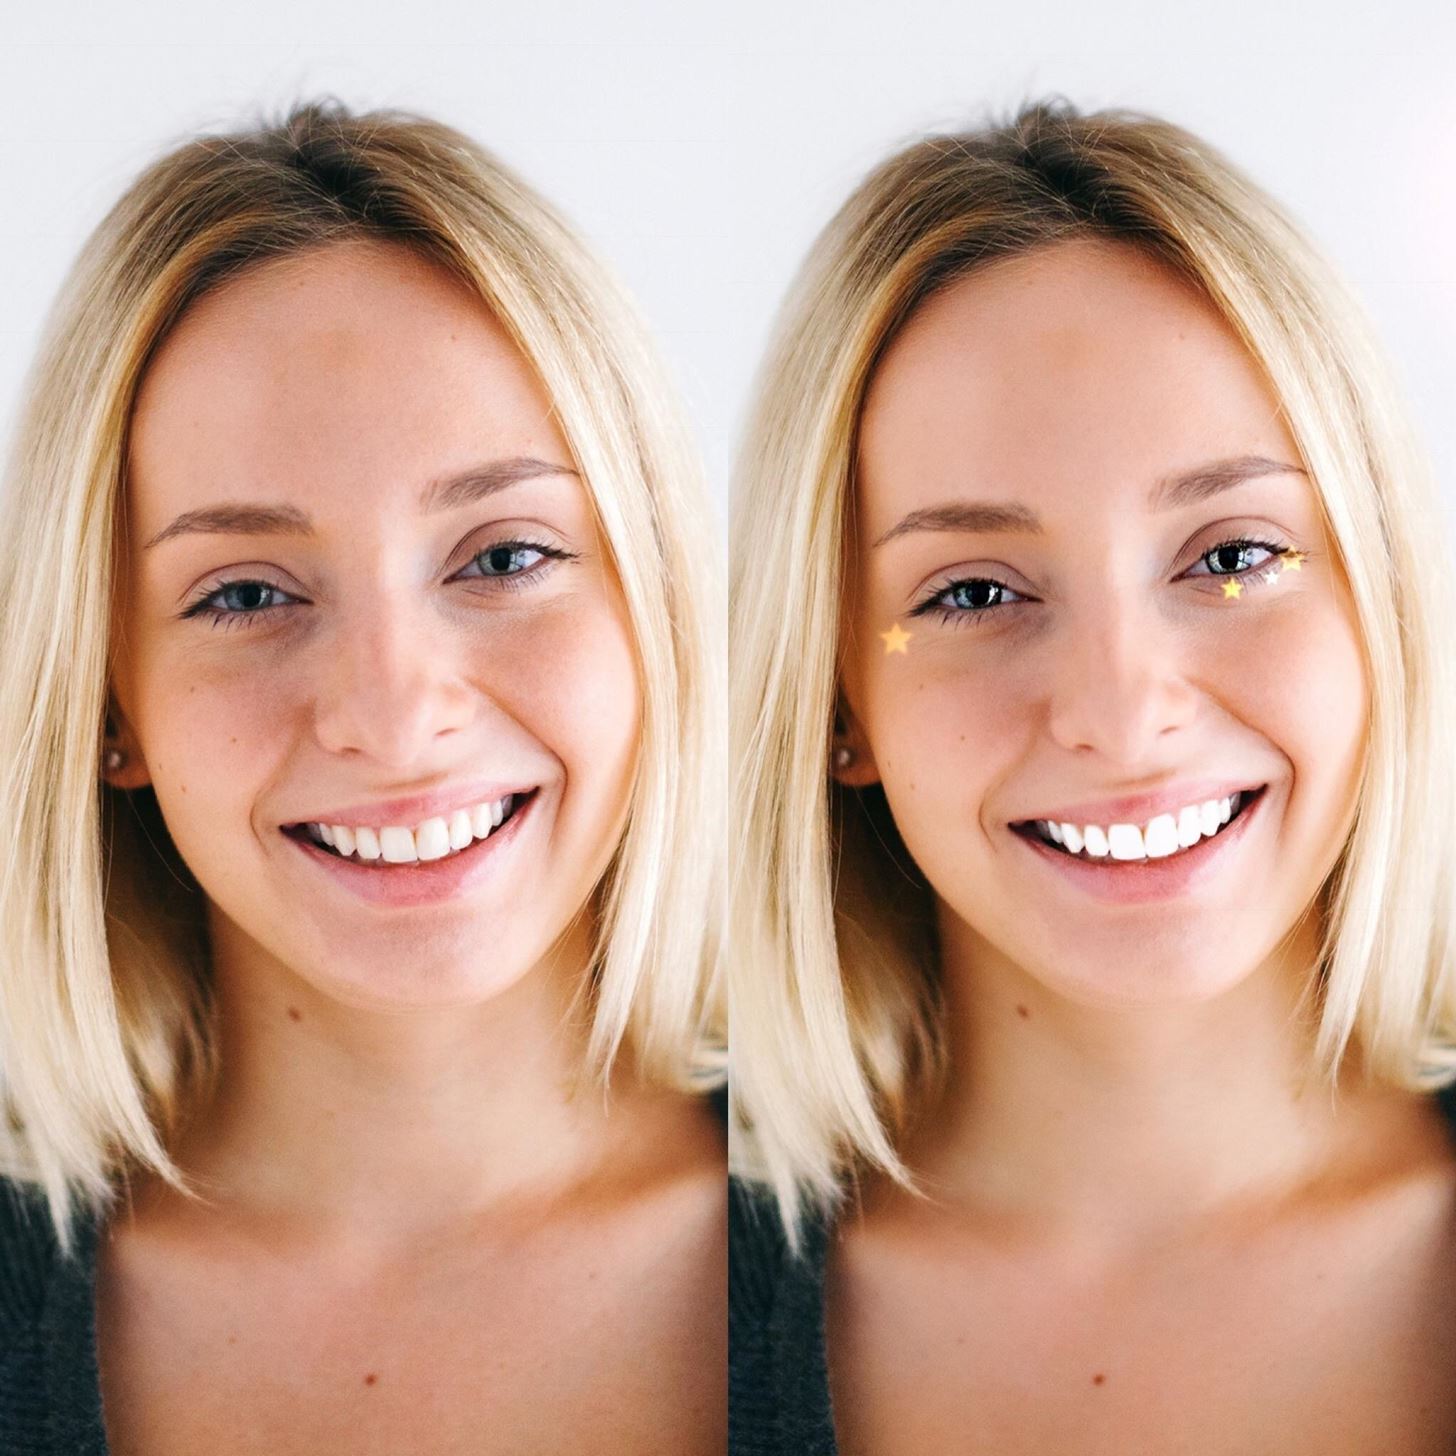 Meitu's BeautyPlus Selfie-Perfecting App Just Got Some Fun AR Filters....